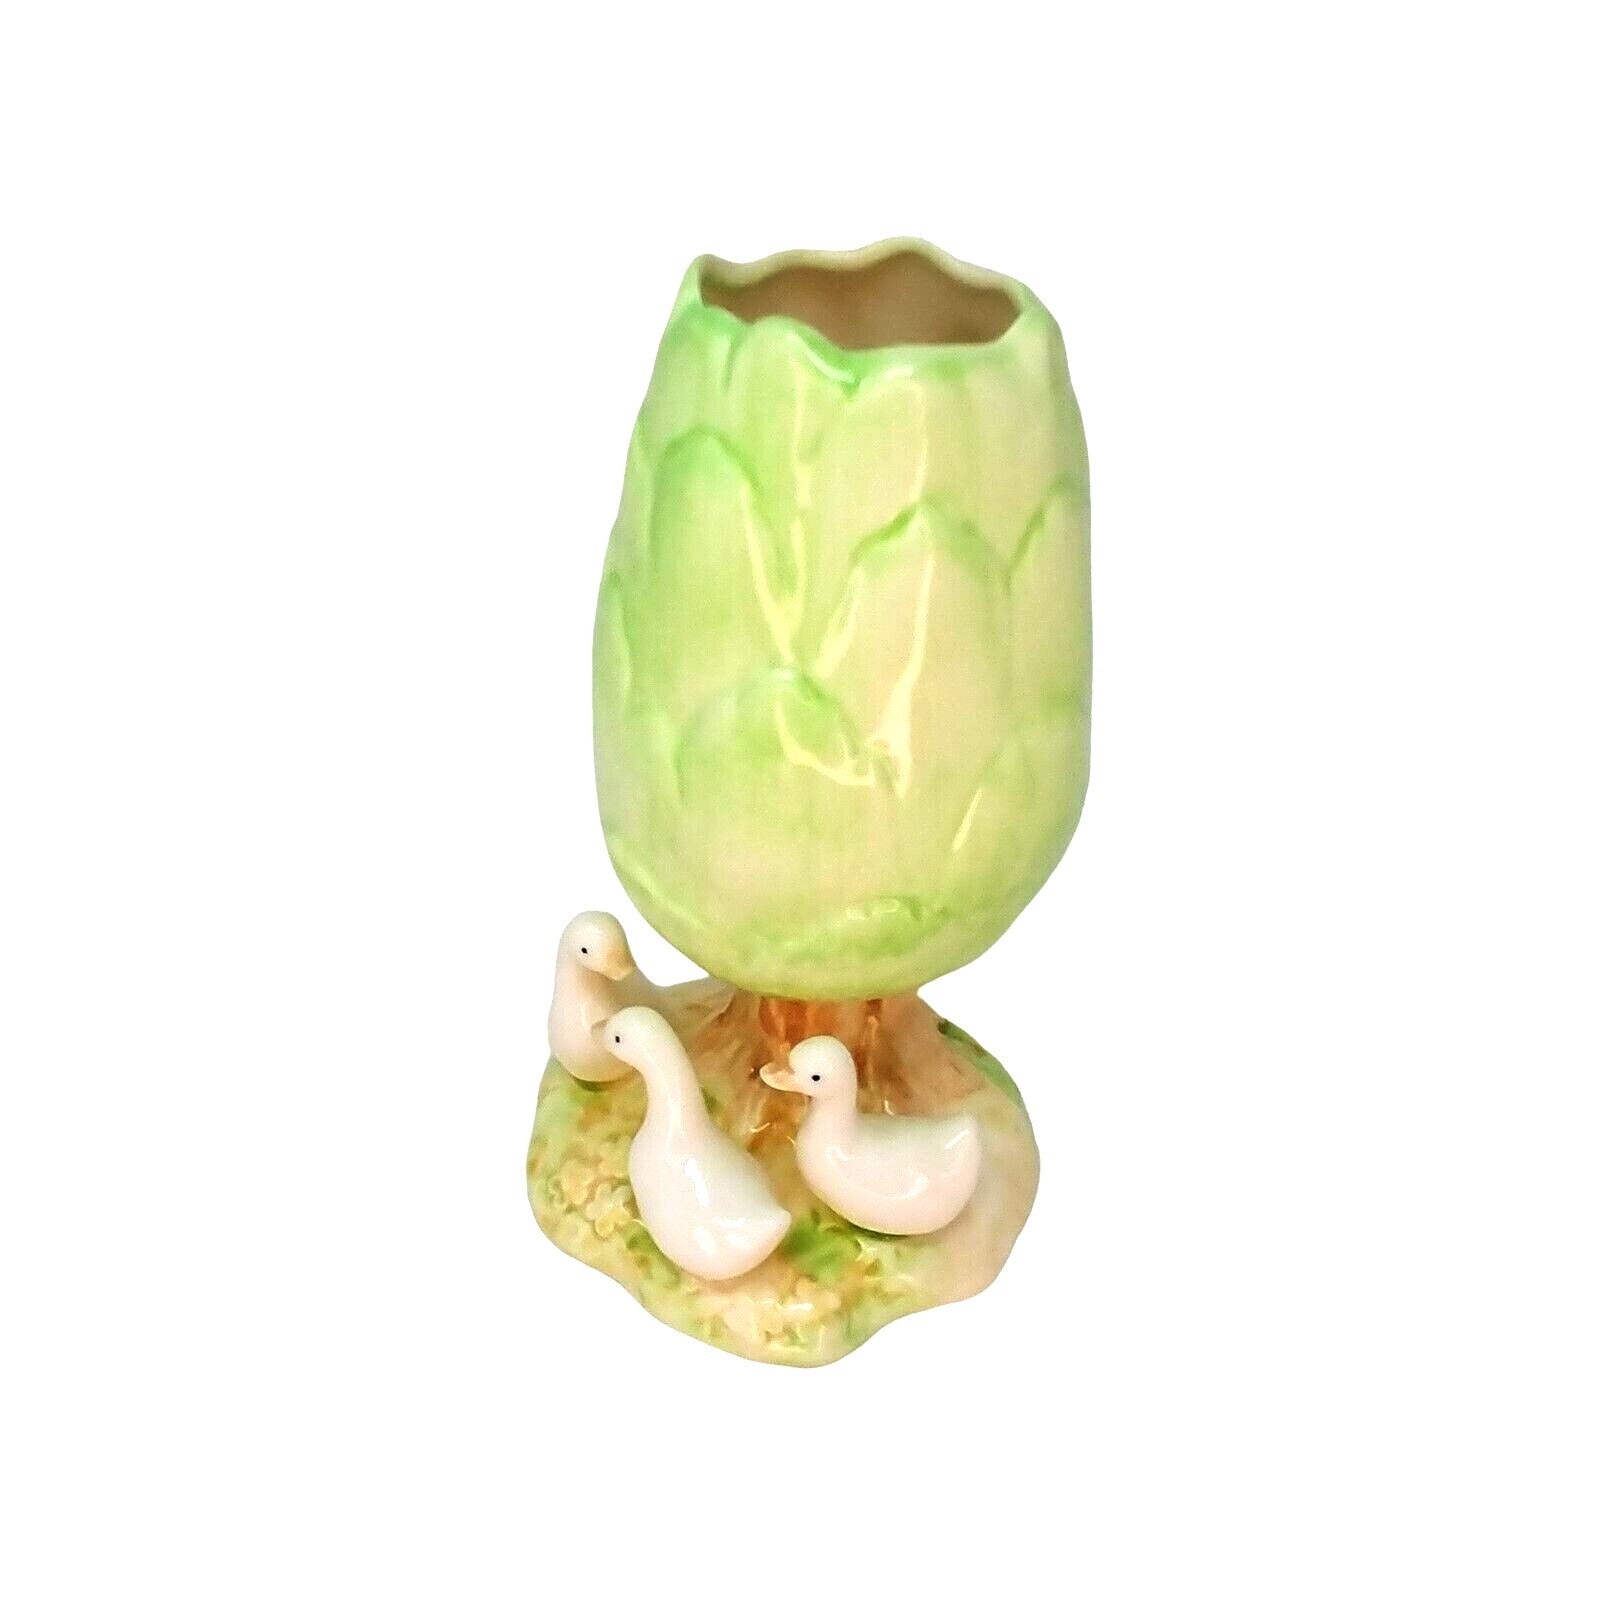 Vase Green Tree Geese Omnibus Japan Ceramic 6" H Vintage Spring Easter Decor